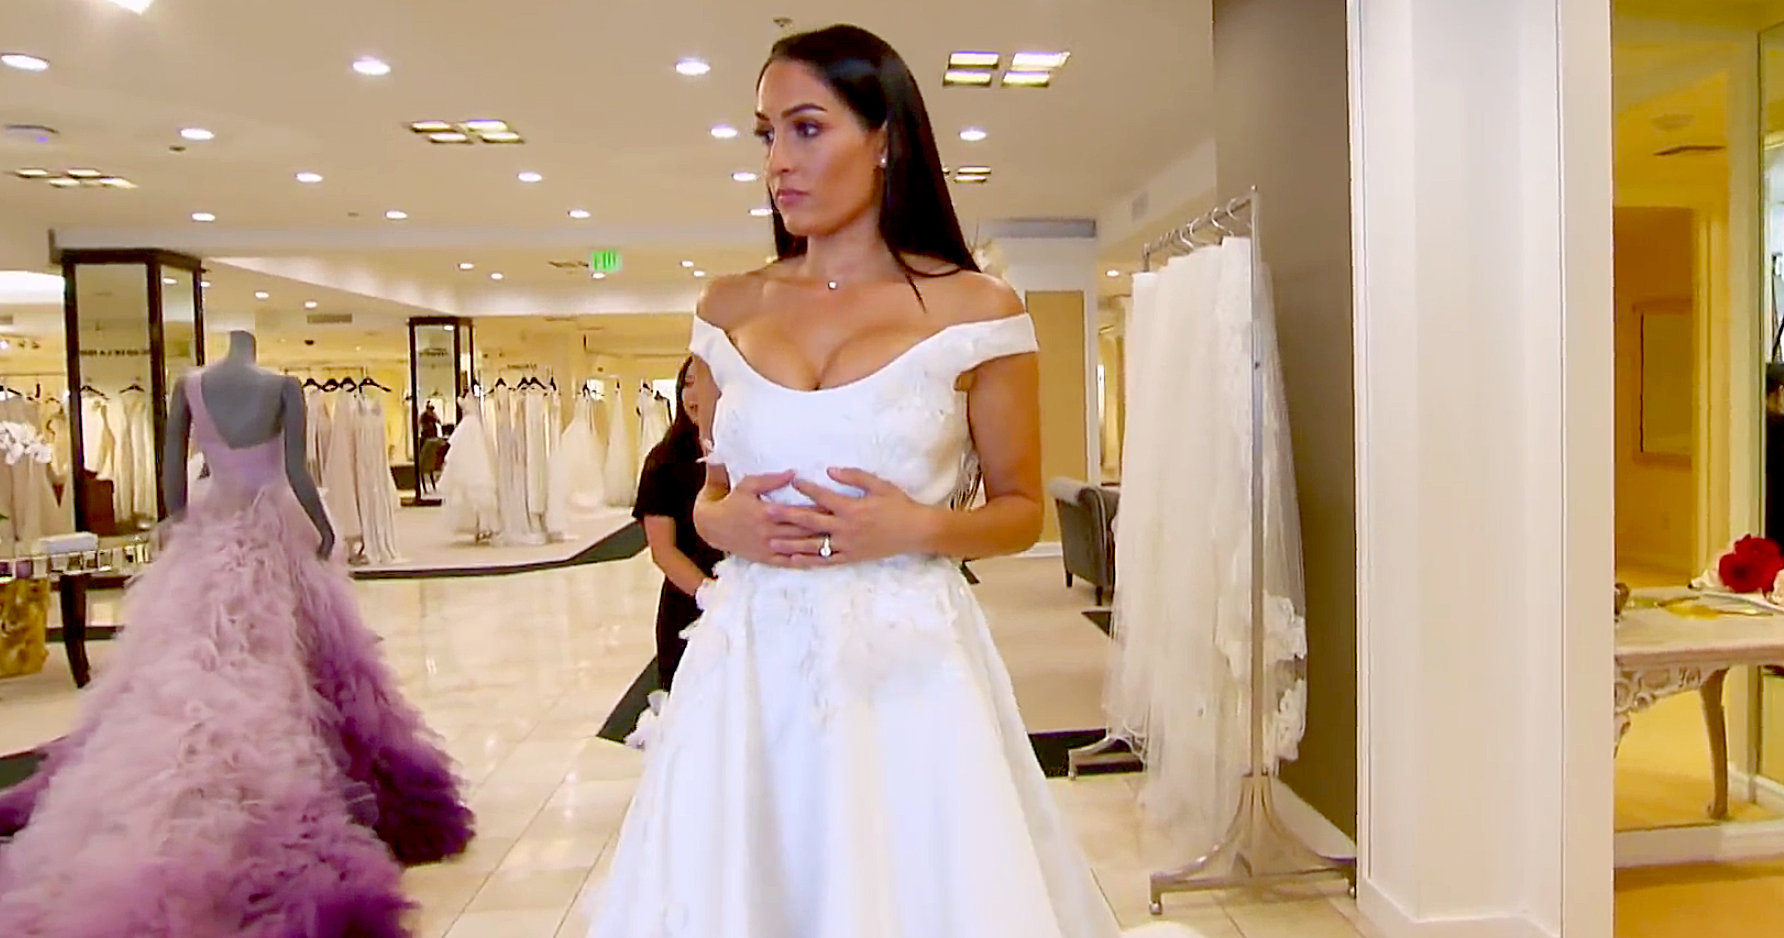 Nikki Bella Something Felt Off While Wedding Dress Shopping